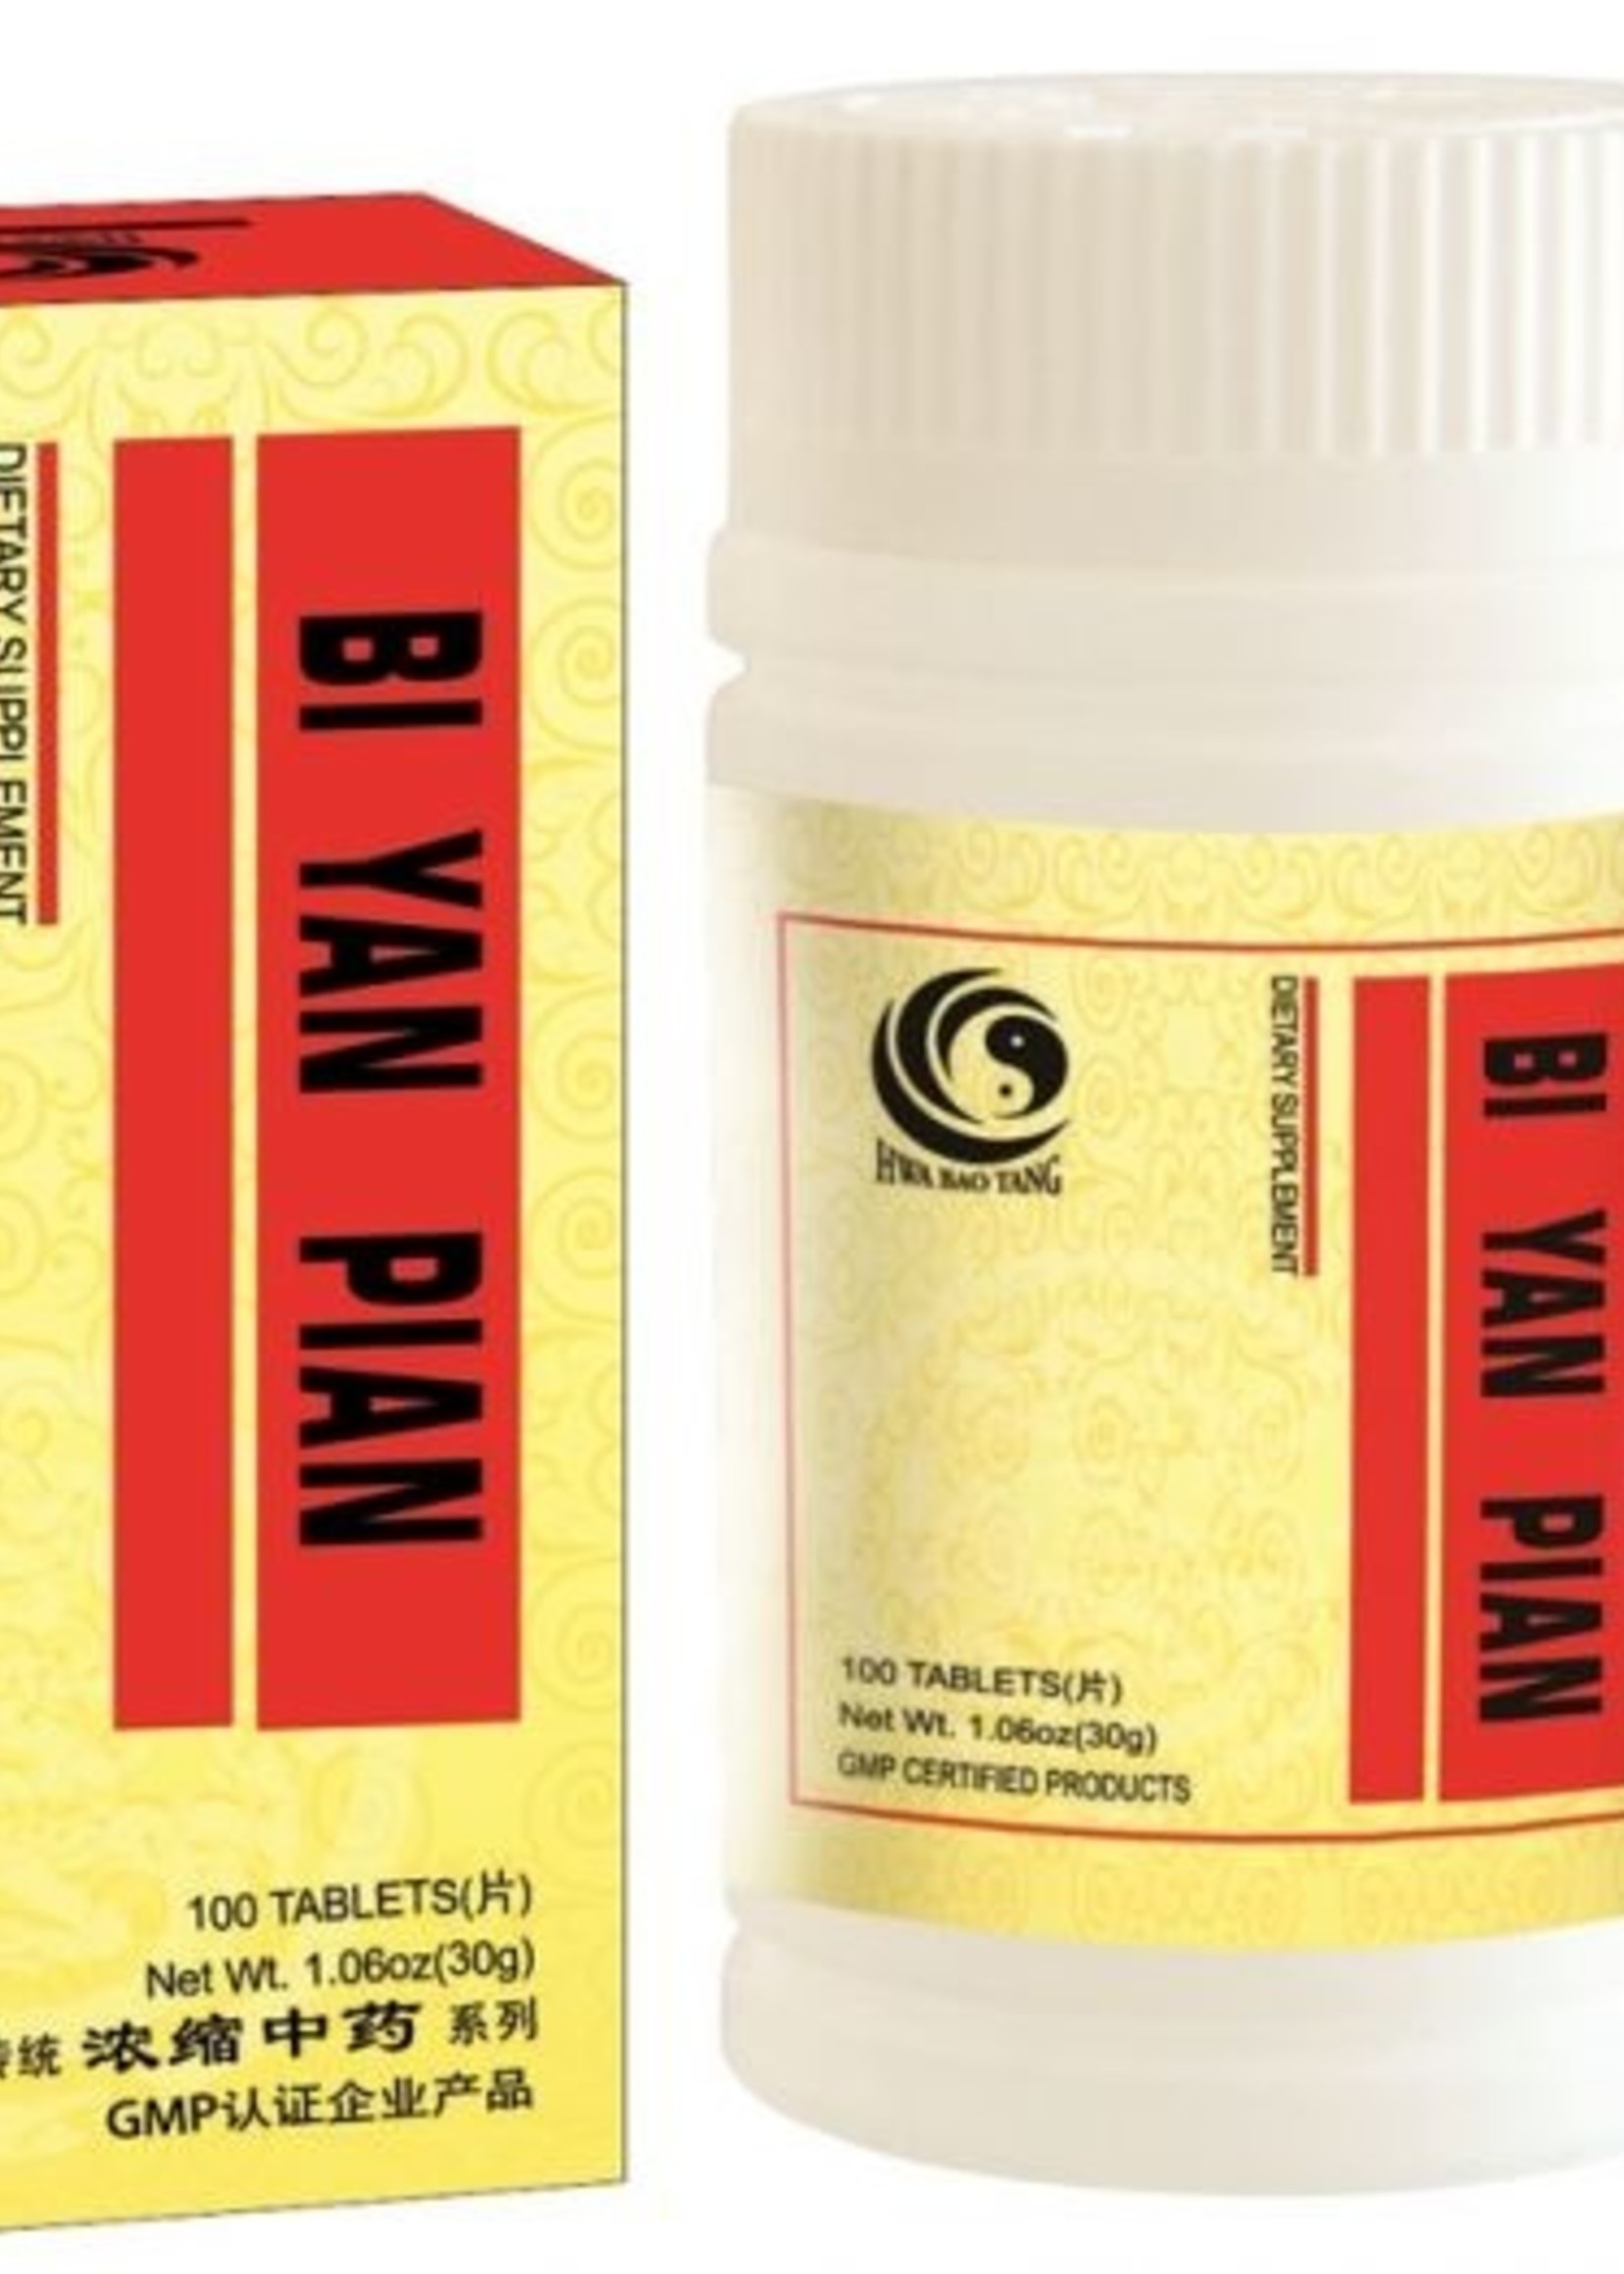 Hwa Bao Tang Bi Yan Pian - Nose Inflammation Tablets